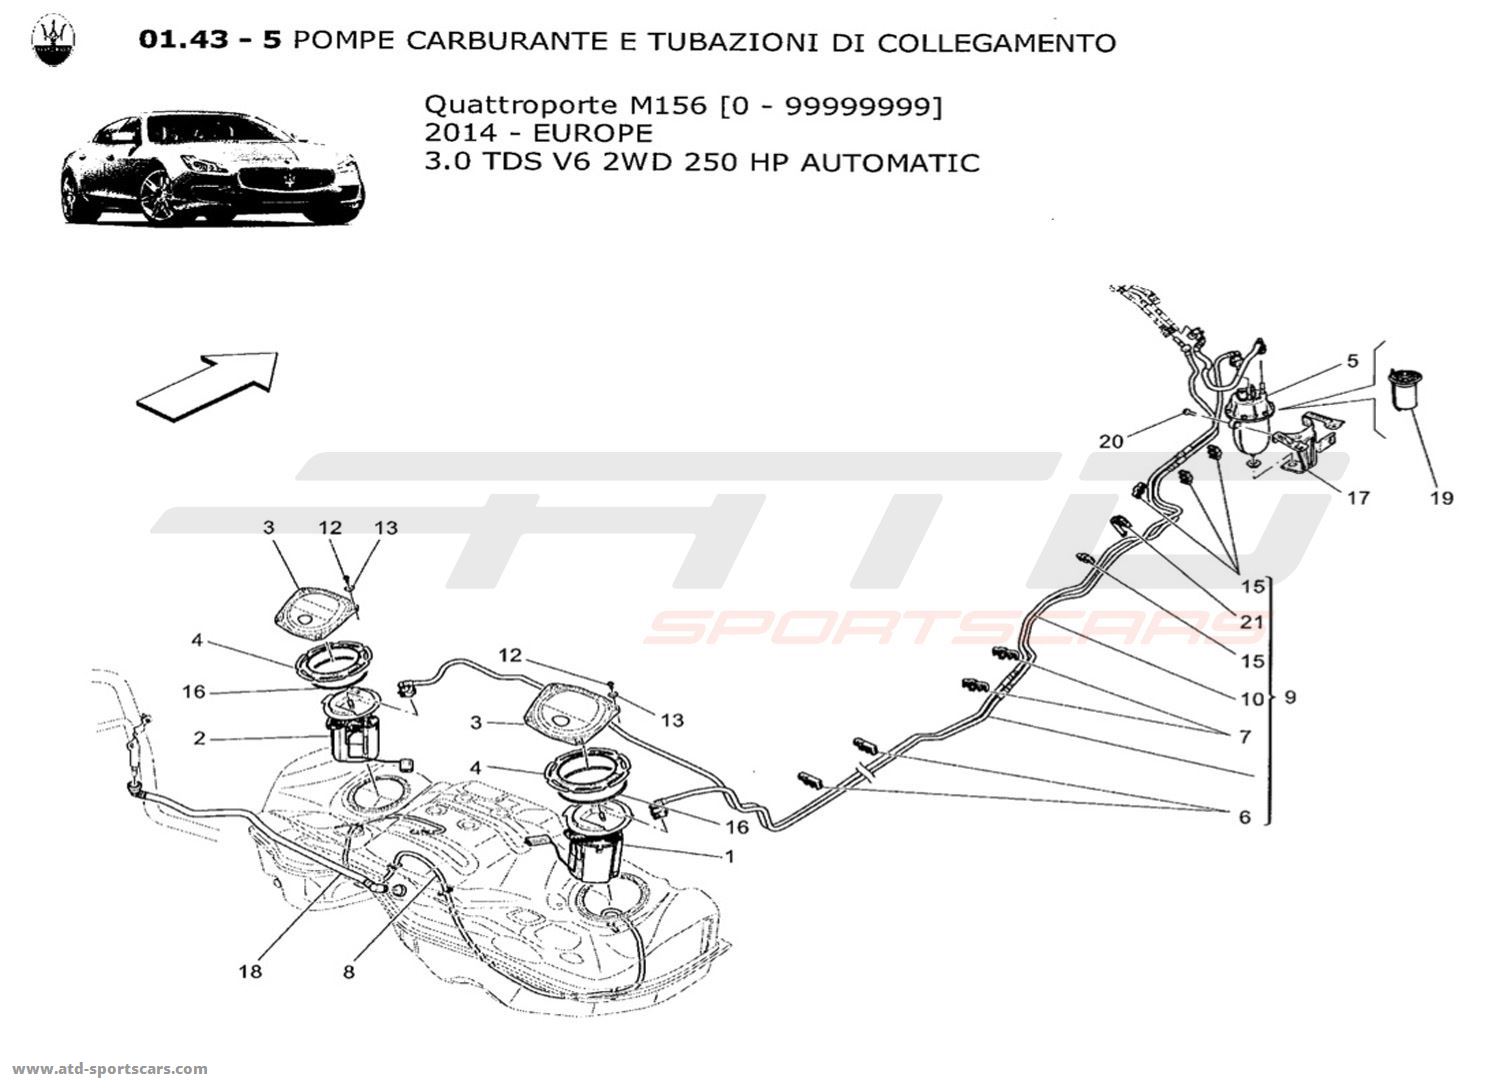 Maserati Quattroporte V6 3 0l Diesel Auto 14 Air Intake Fuel Parts At Atd Sportscars Atd Sportscars